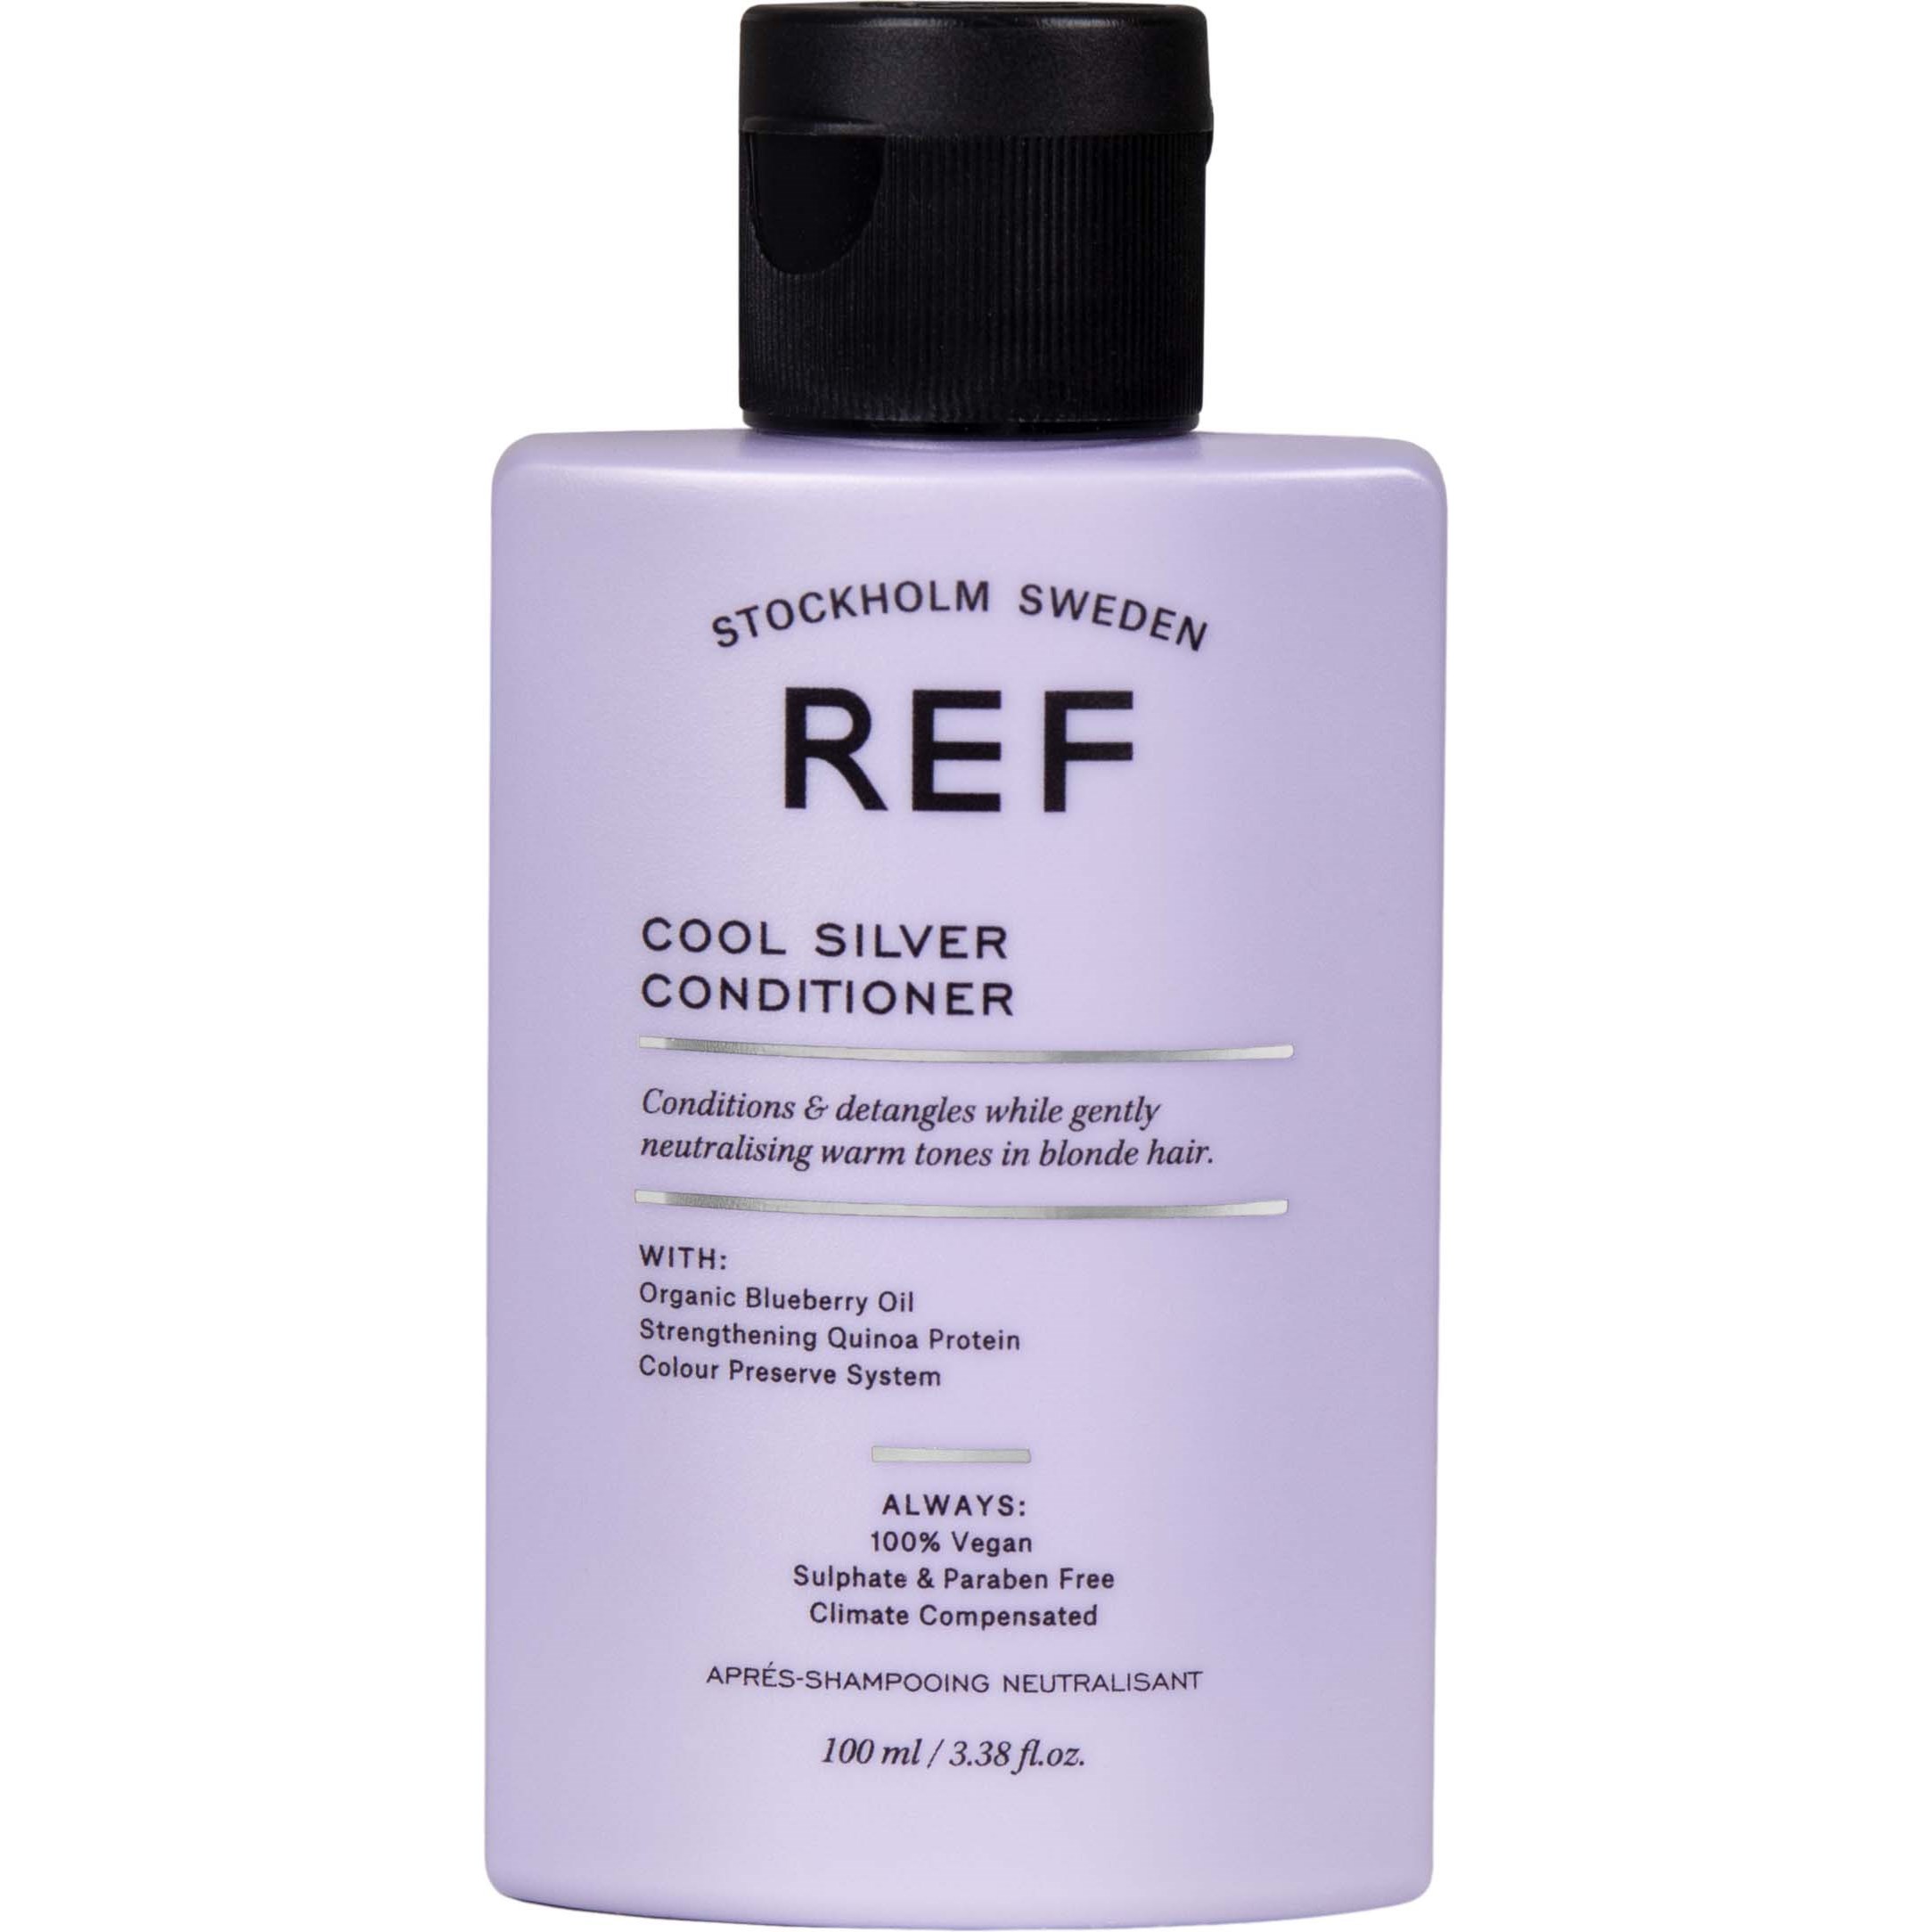 REF. Cool Silver Conditioner 100 ml